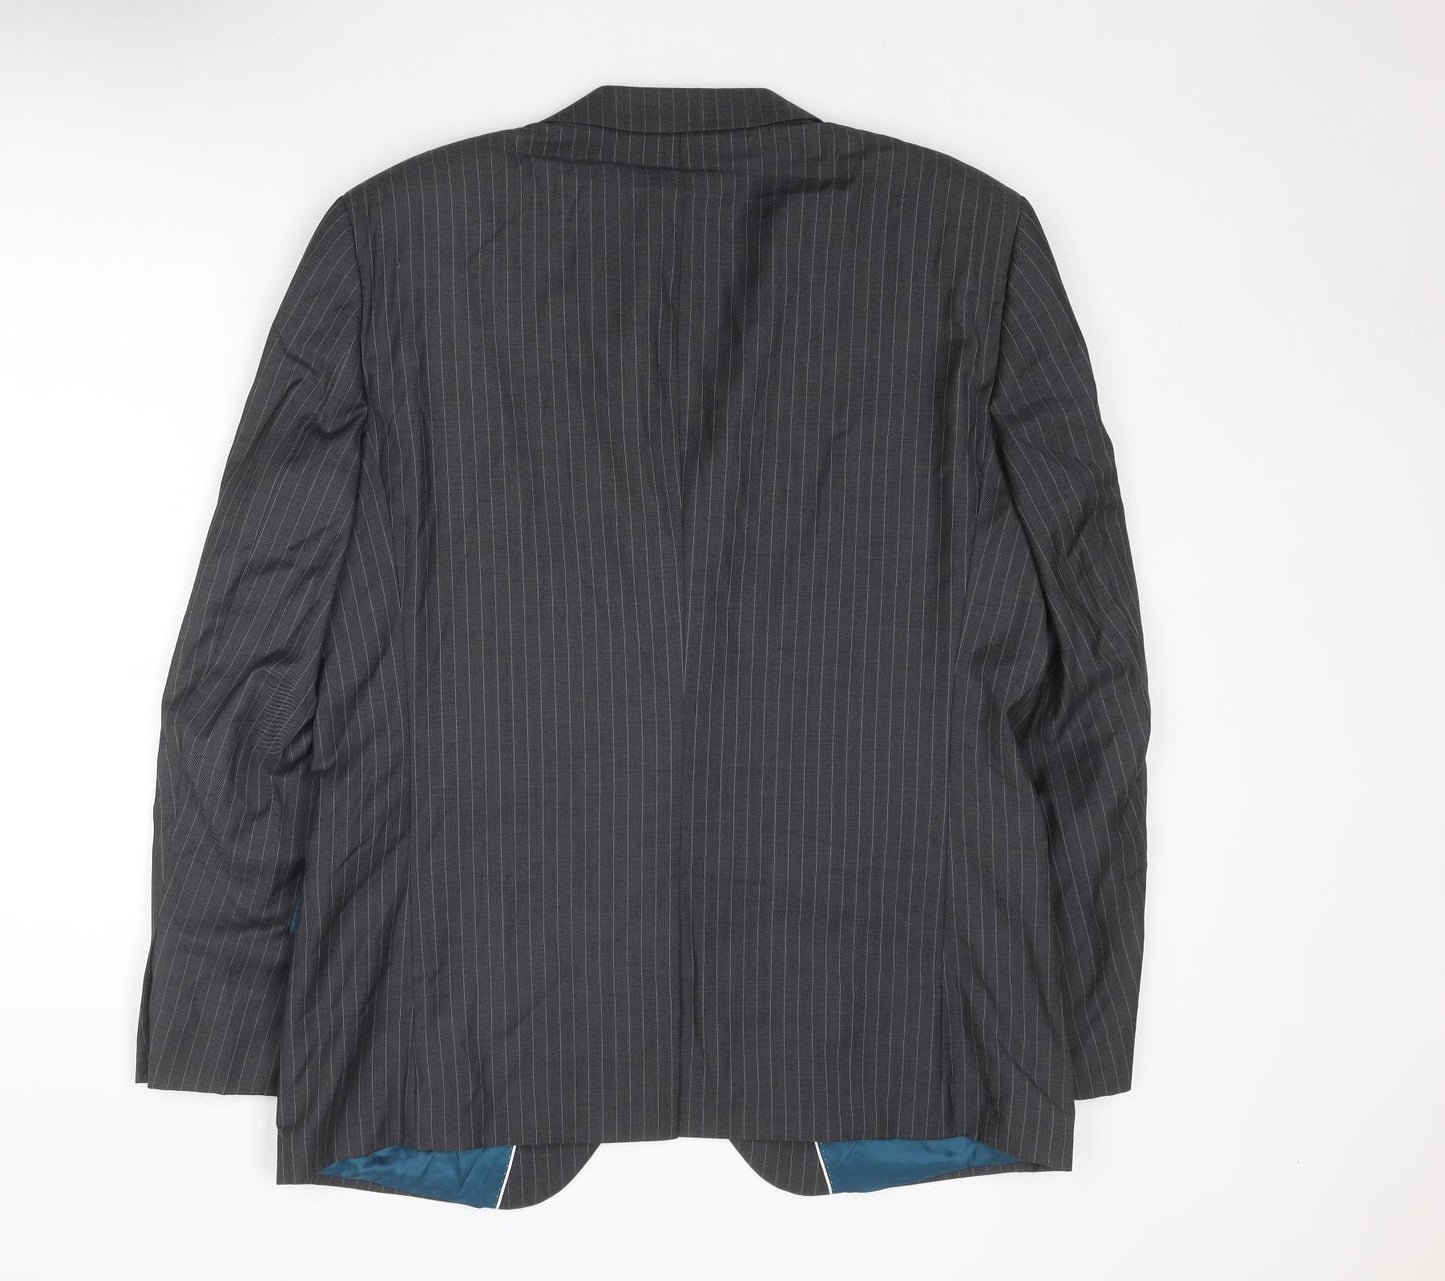 NEXT Mens Grey Striped Wool Jacket Suit Jacket Size 44 Regular